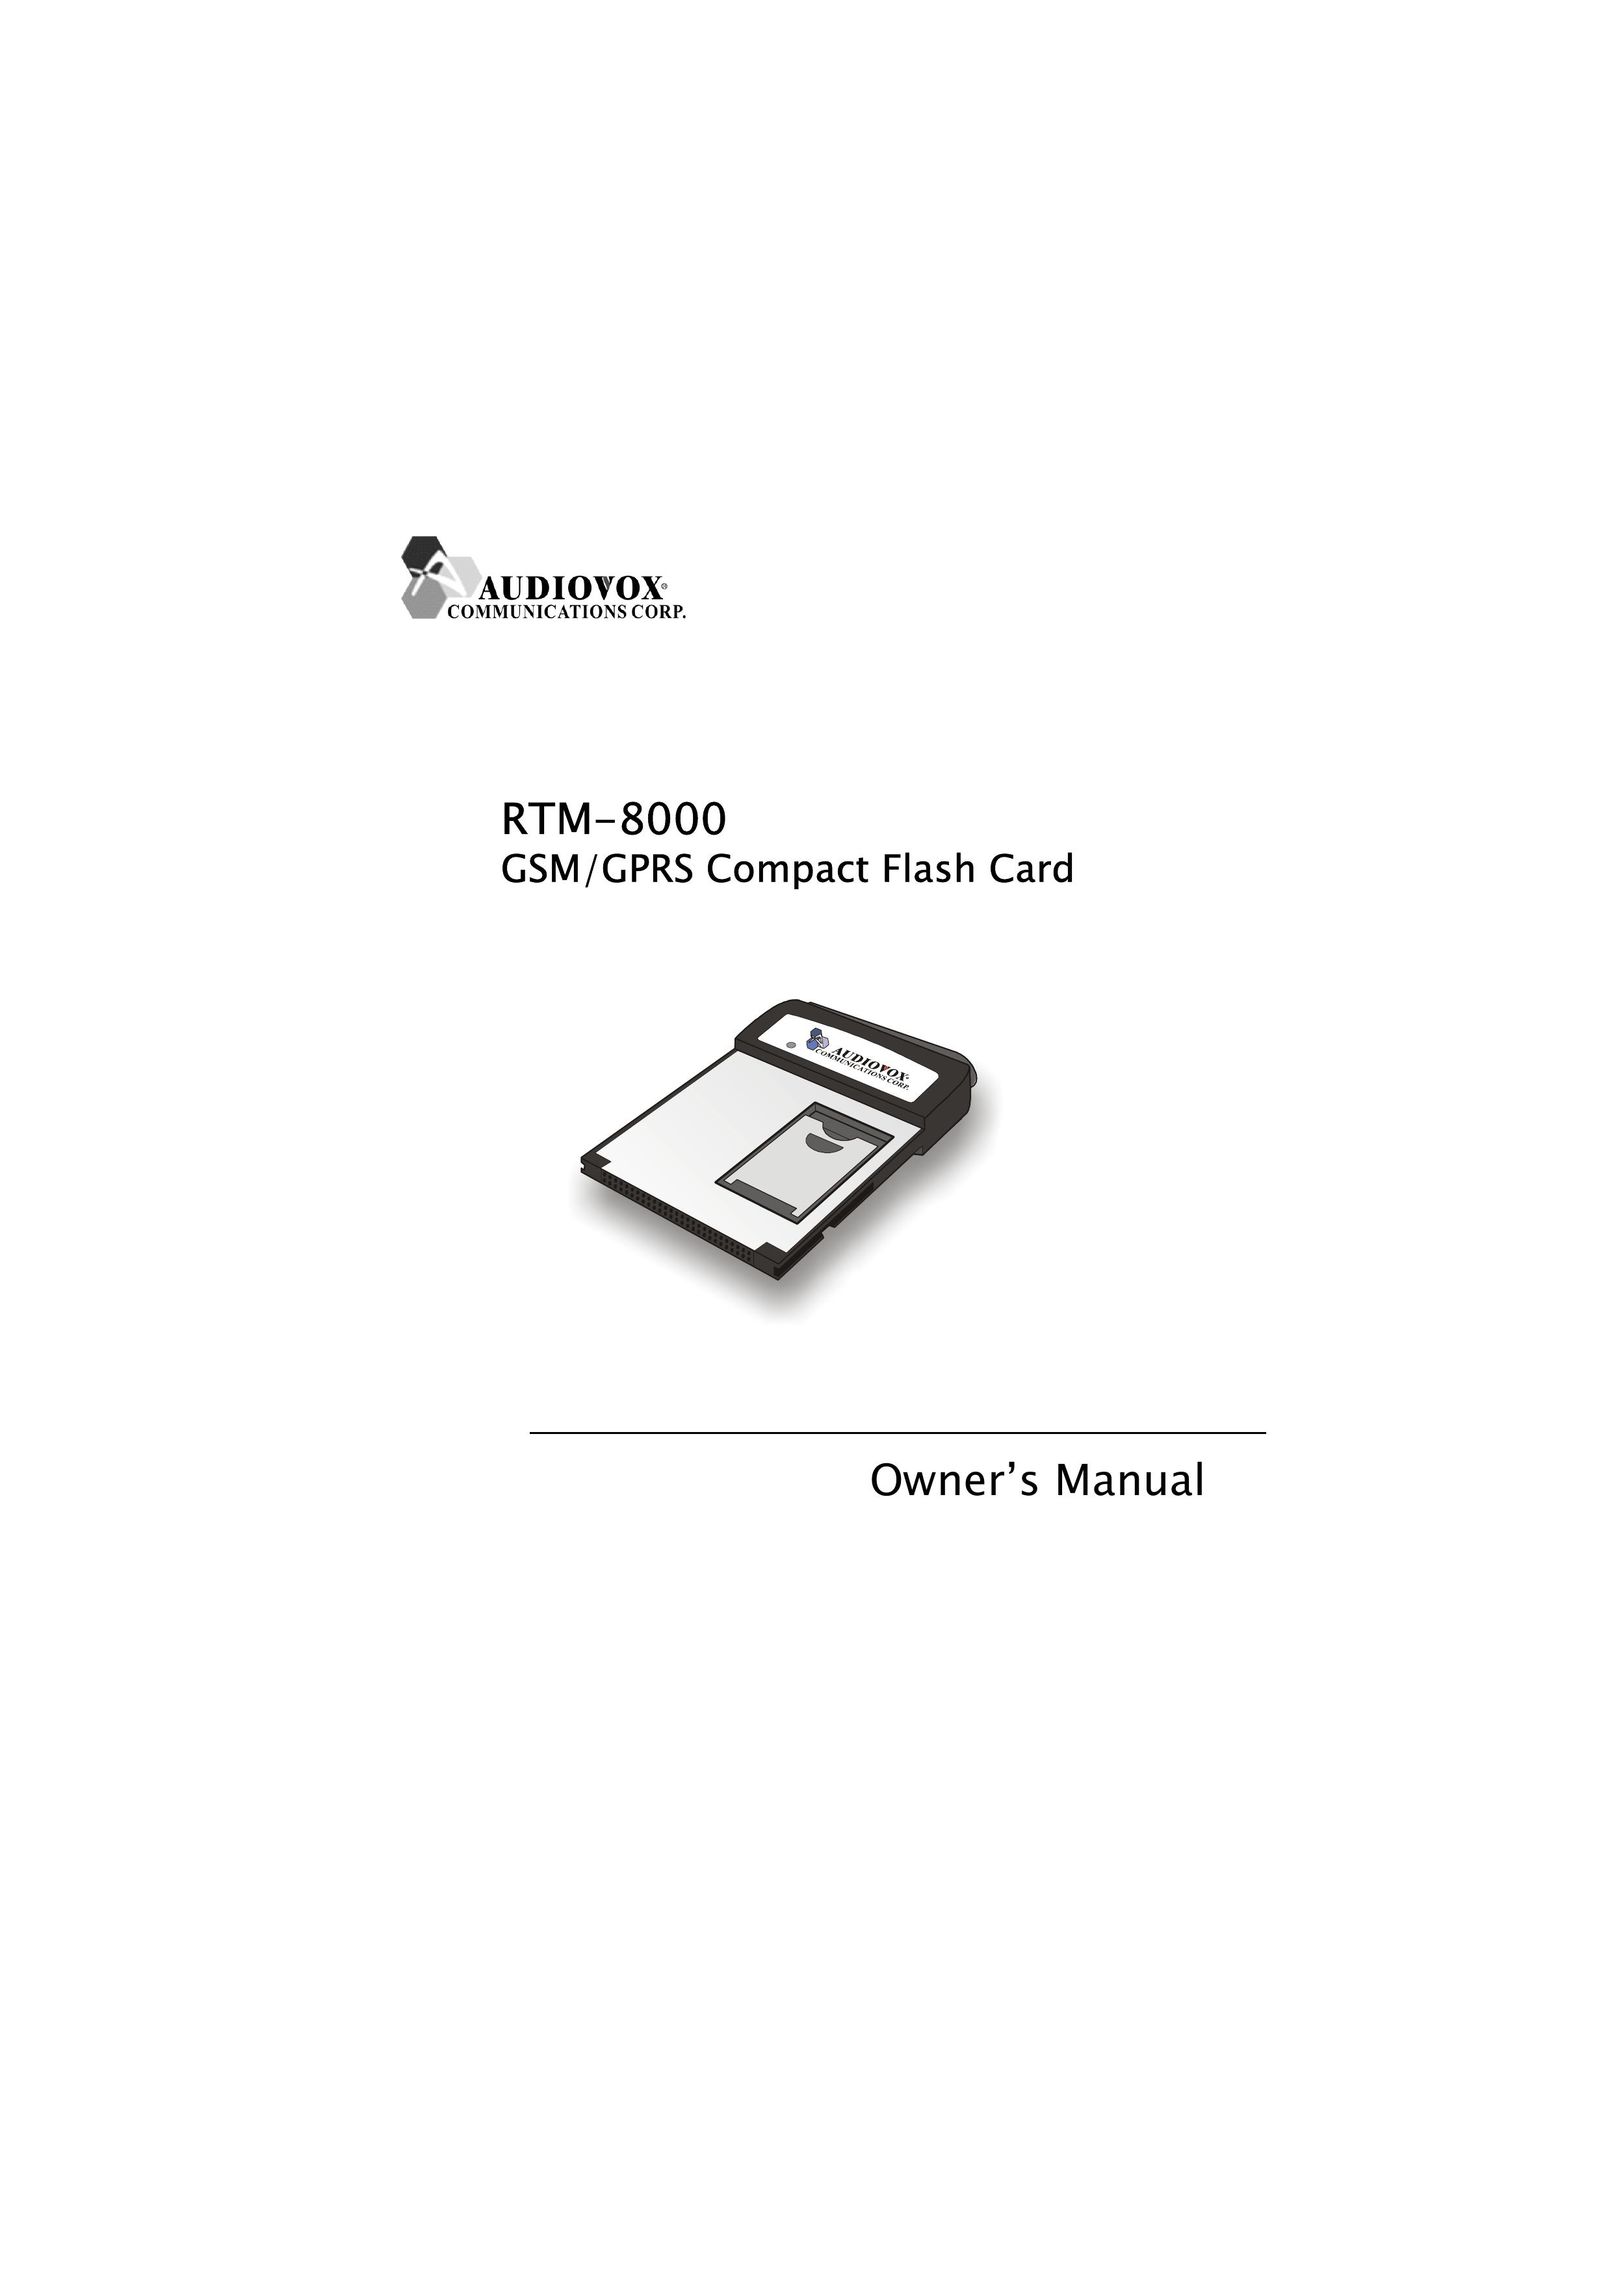 Keys Fitness RTM-8000 Network Card User Manual